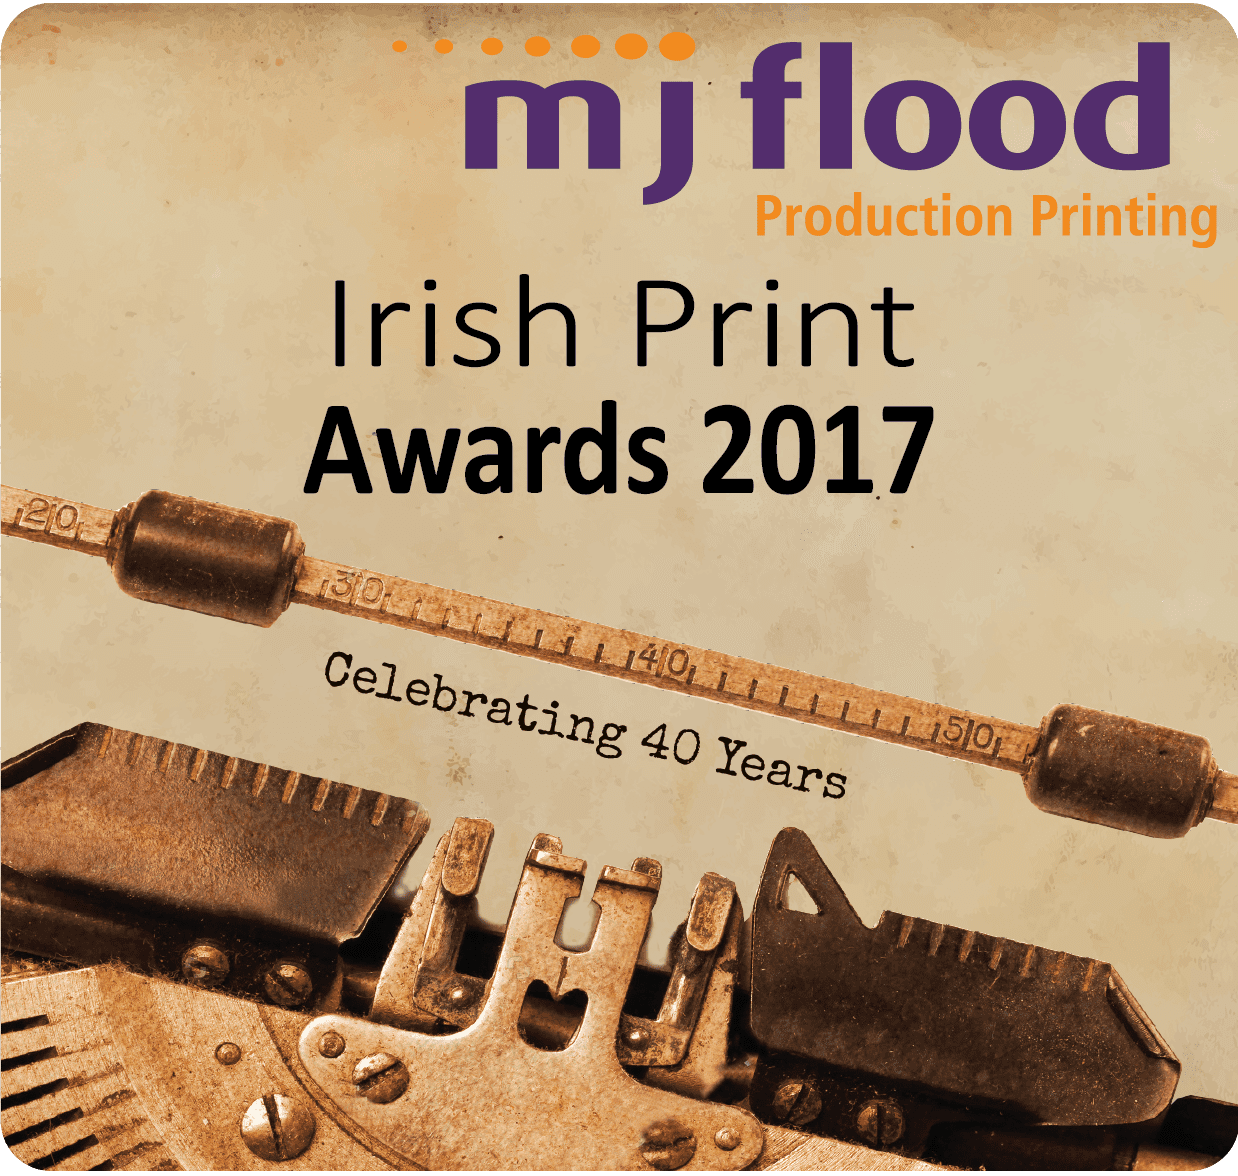 Digital Printer of the Year 2017 sponsored by MJ Flood